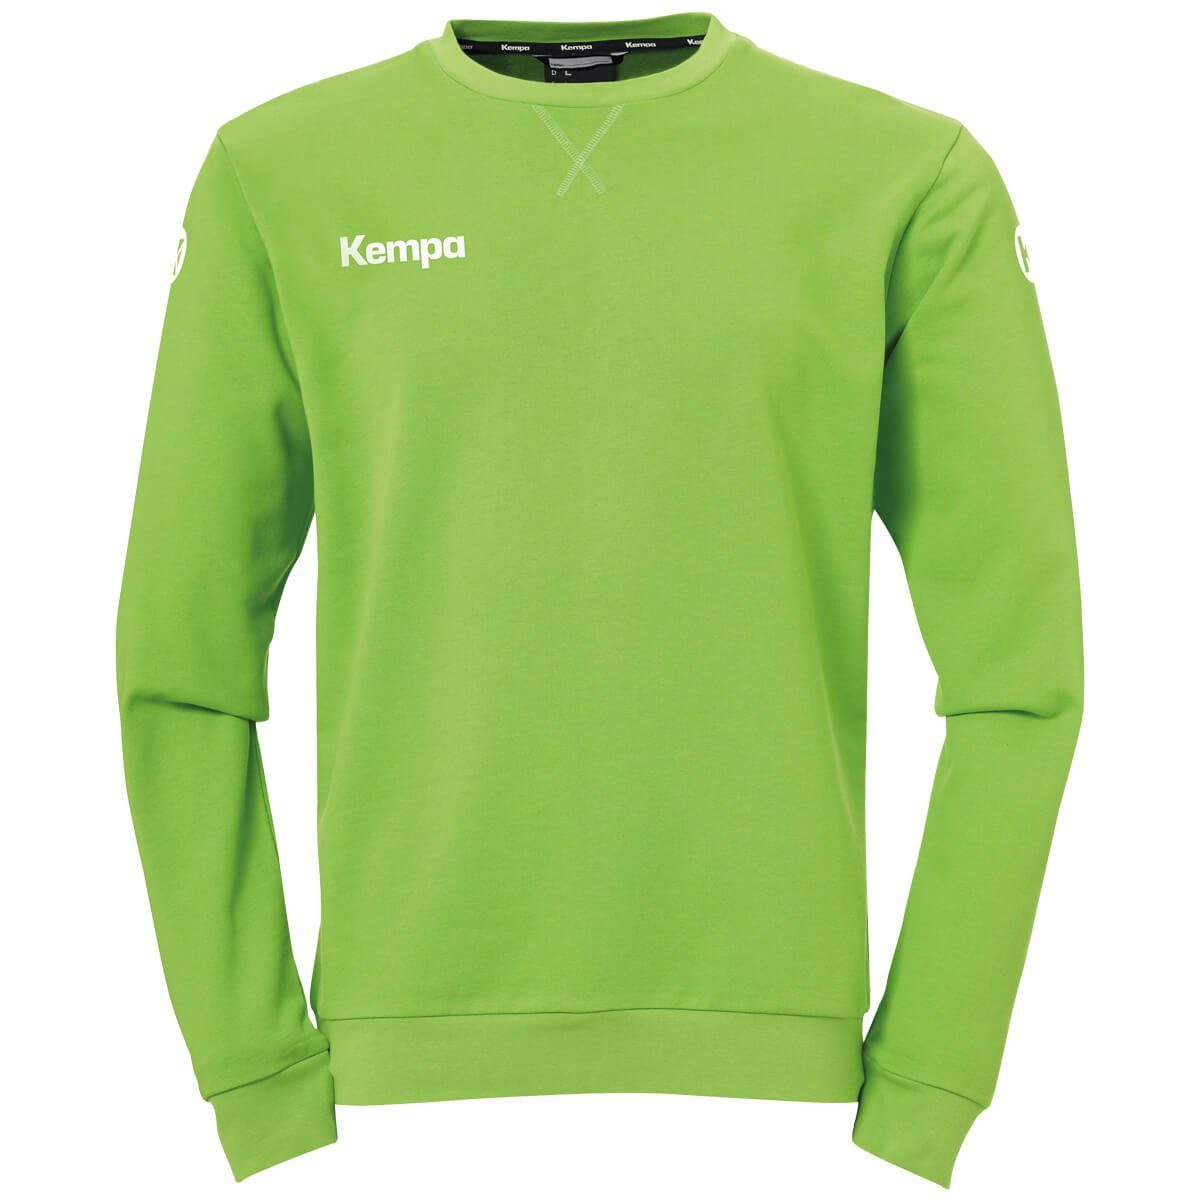 Kempa Sweatshirt Training Top